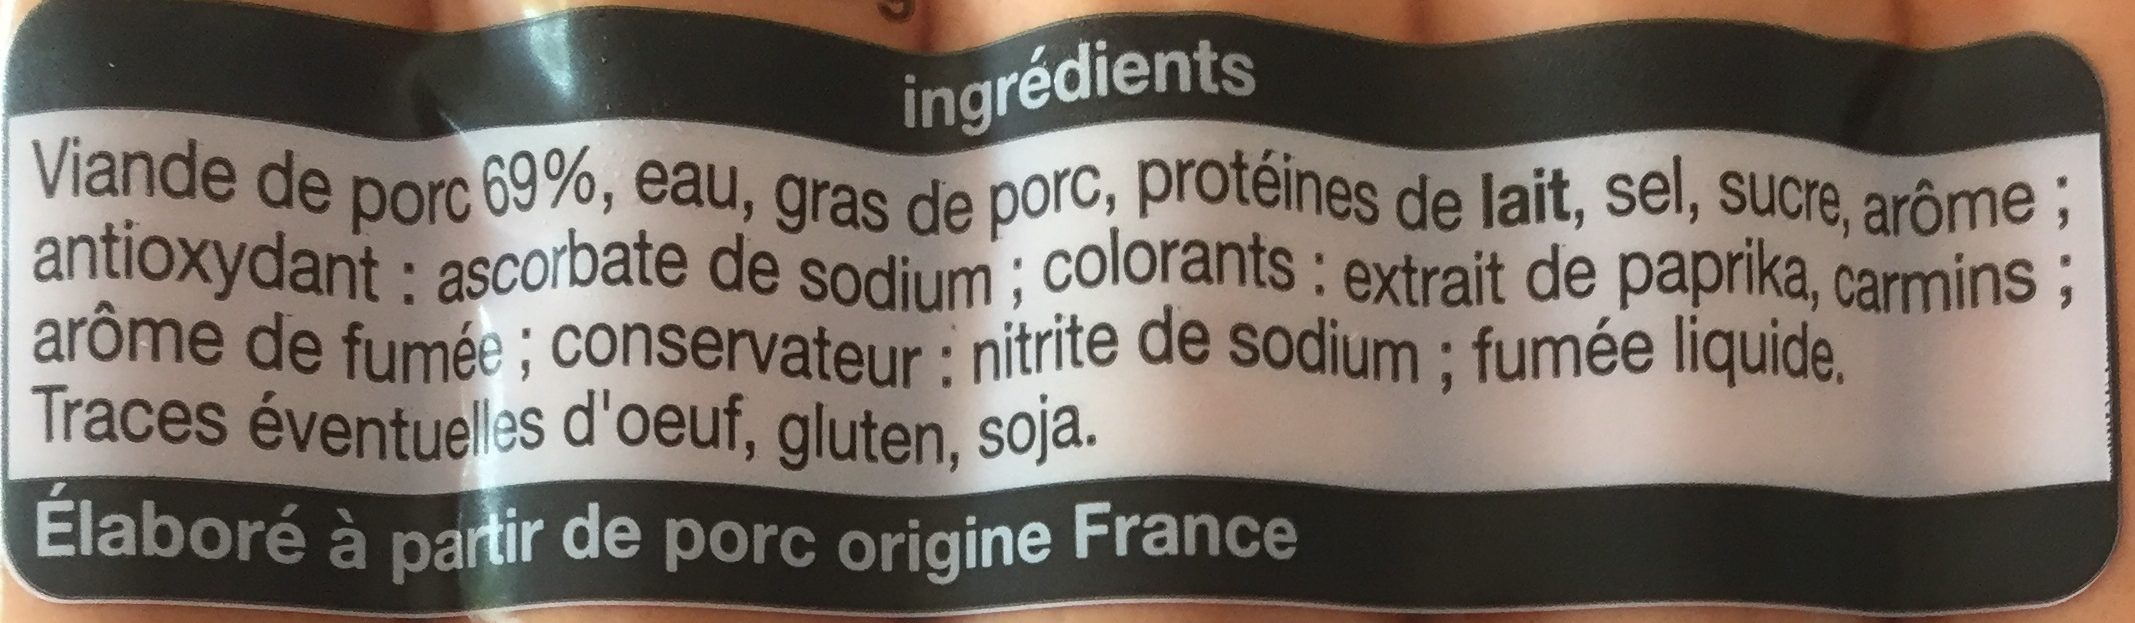 Knacks x10 350g prix choc - Ingredients - fr